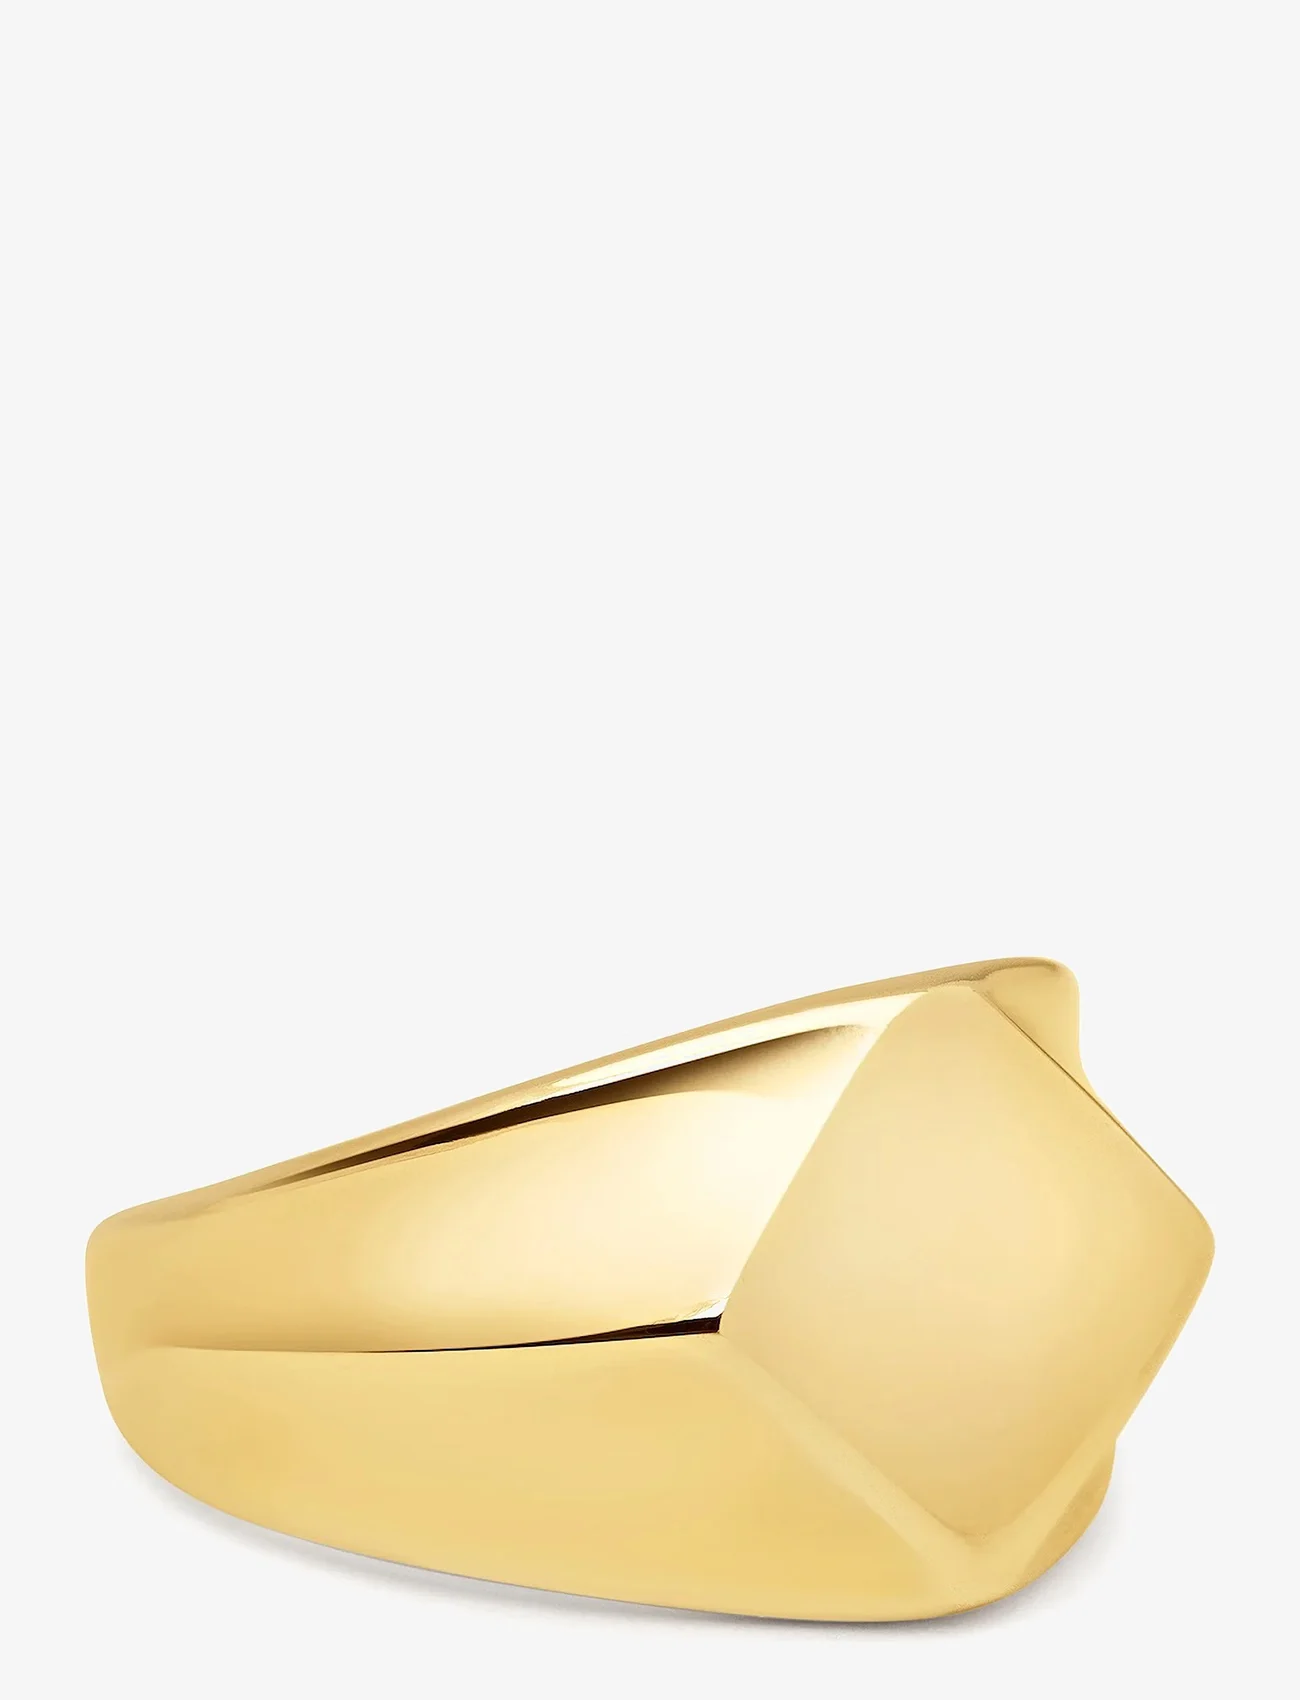 Nialaya - Men's Squared Stainless Steel Ring with Gold Plating - födelsedagspresenter - gold - 0